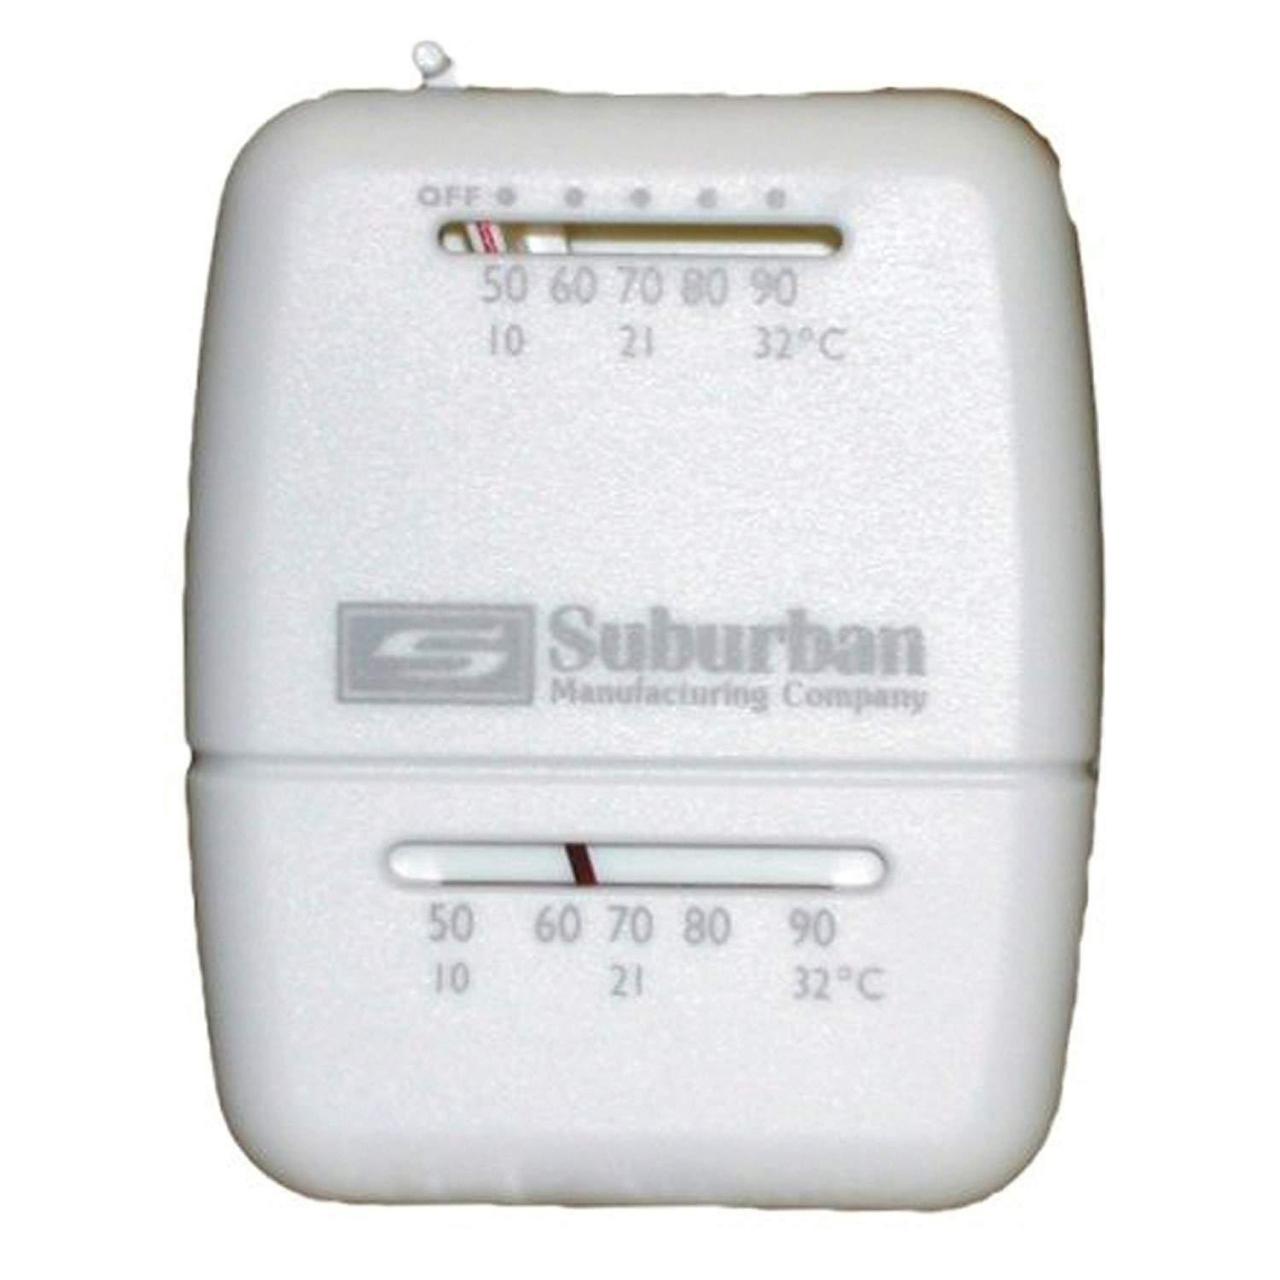 Suburban 161154 Wall Thermostat